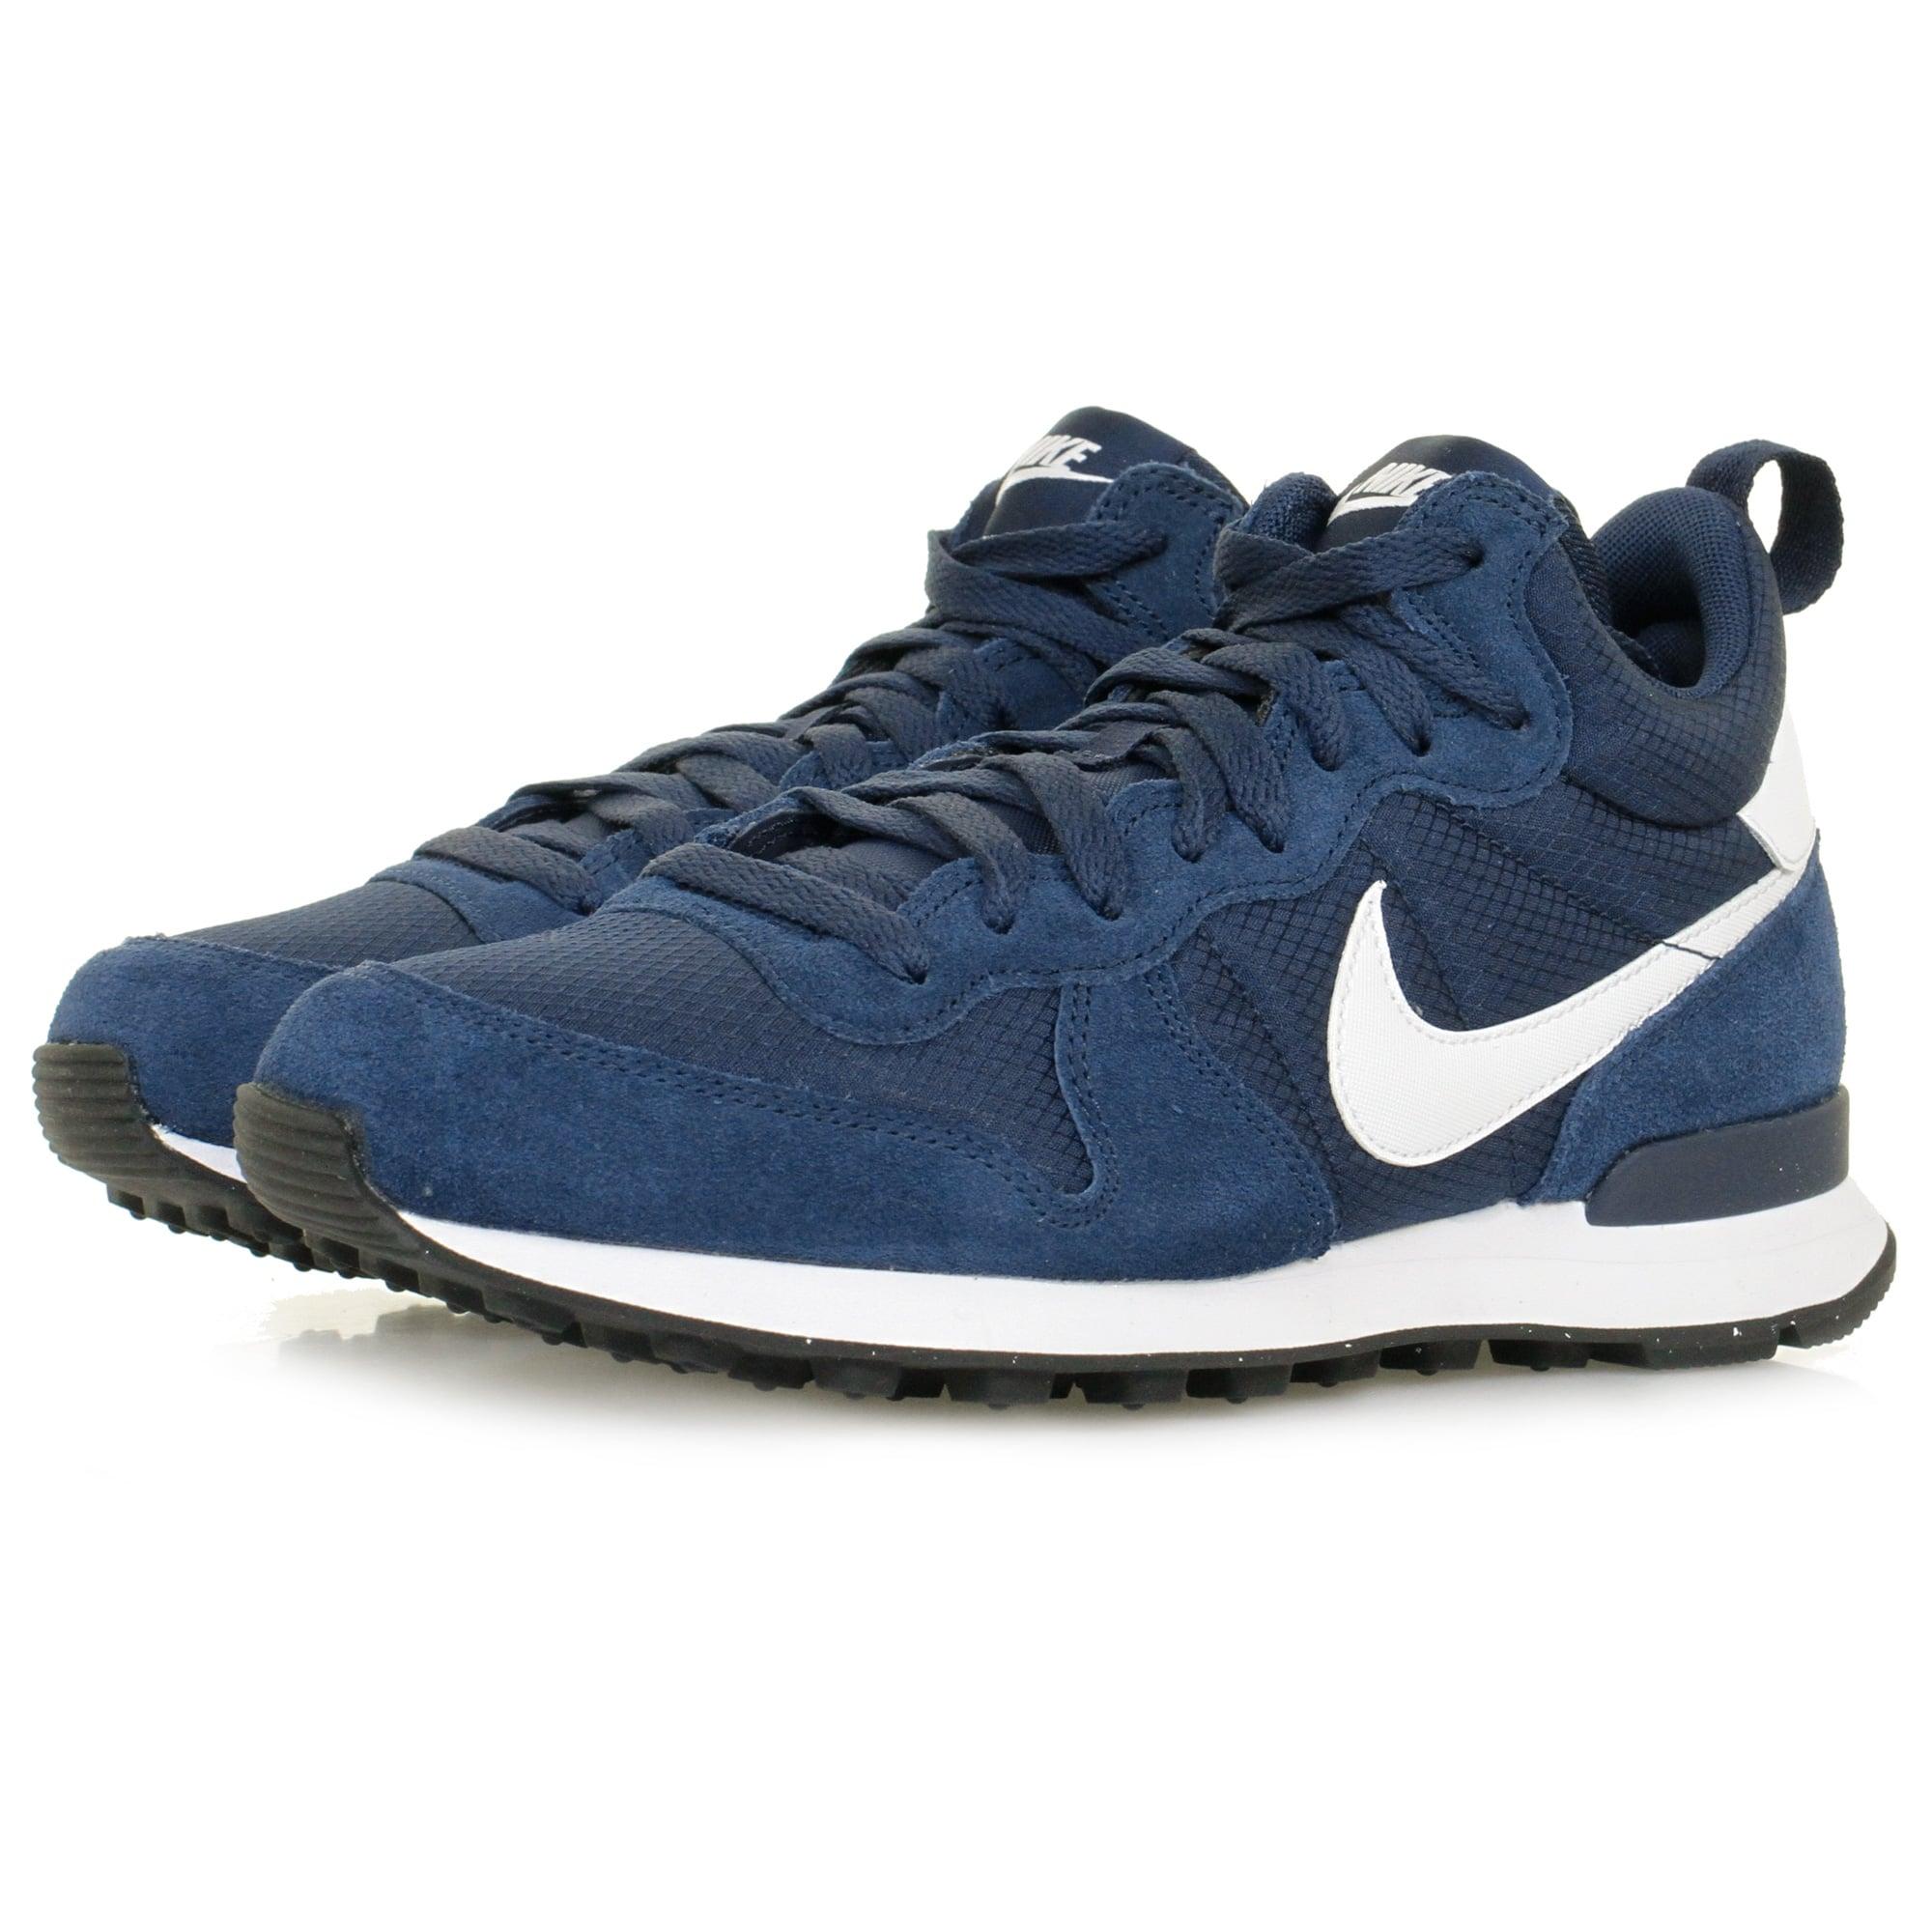 Lyst - Nike Internationalist Mid Midnight Navy Shoe 859478 in Blue for Men